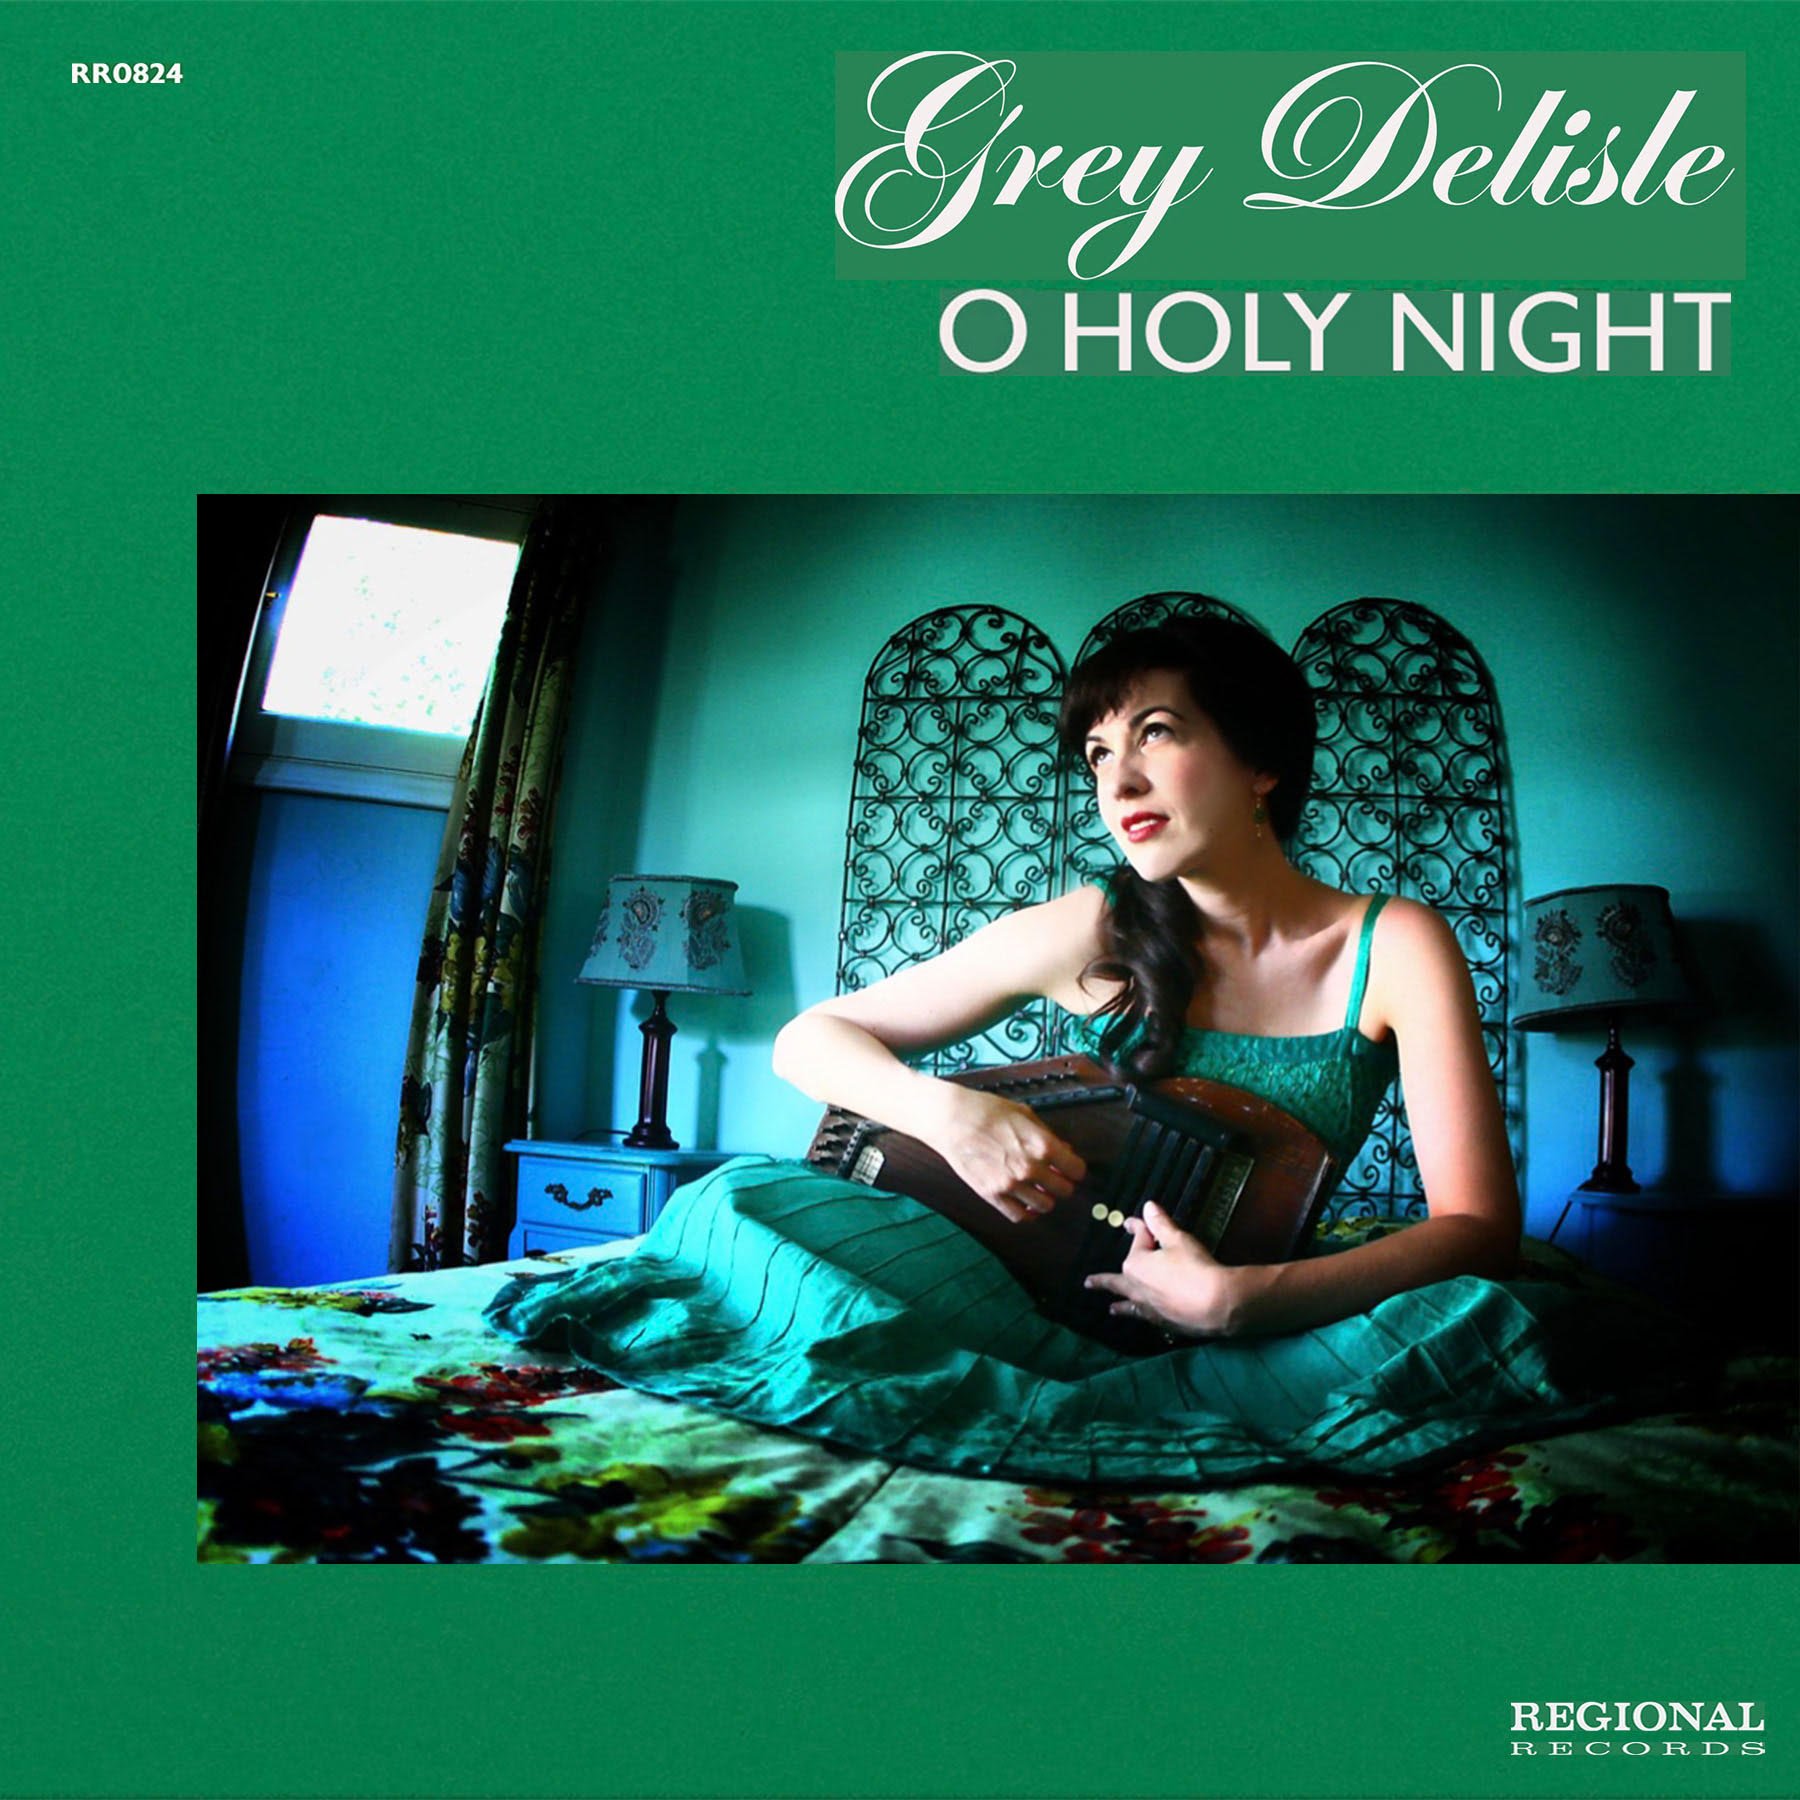 Grey DeLisle Oh Holy Night Cover Art.jpg